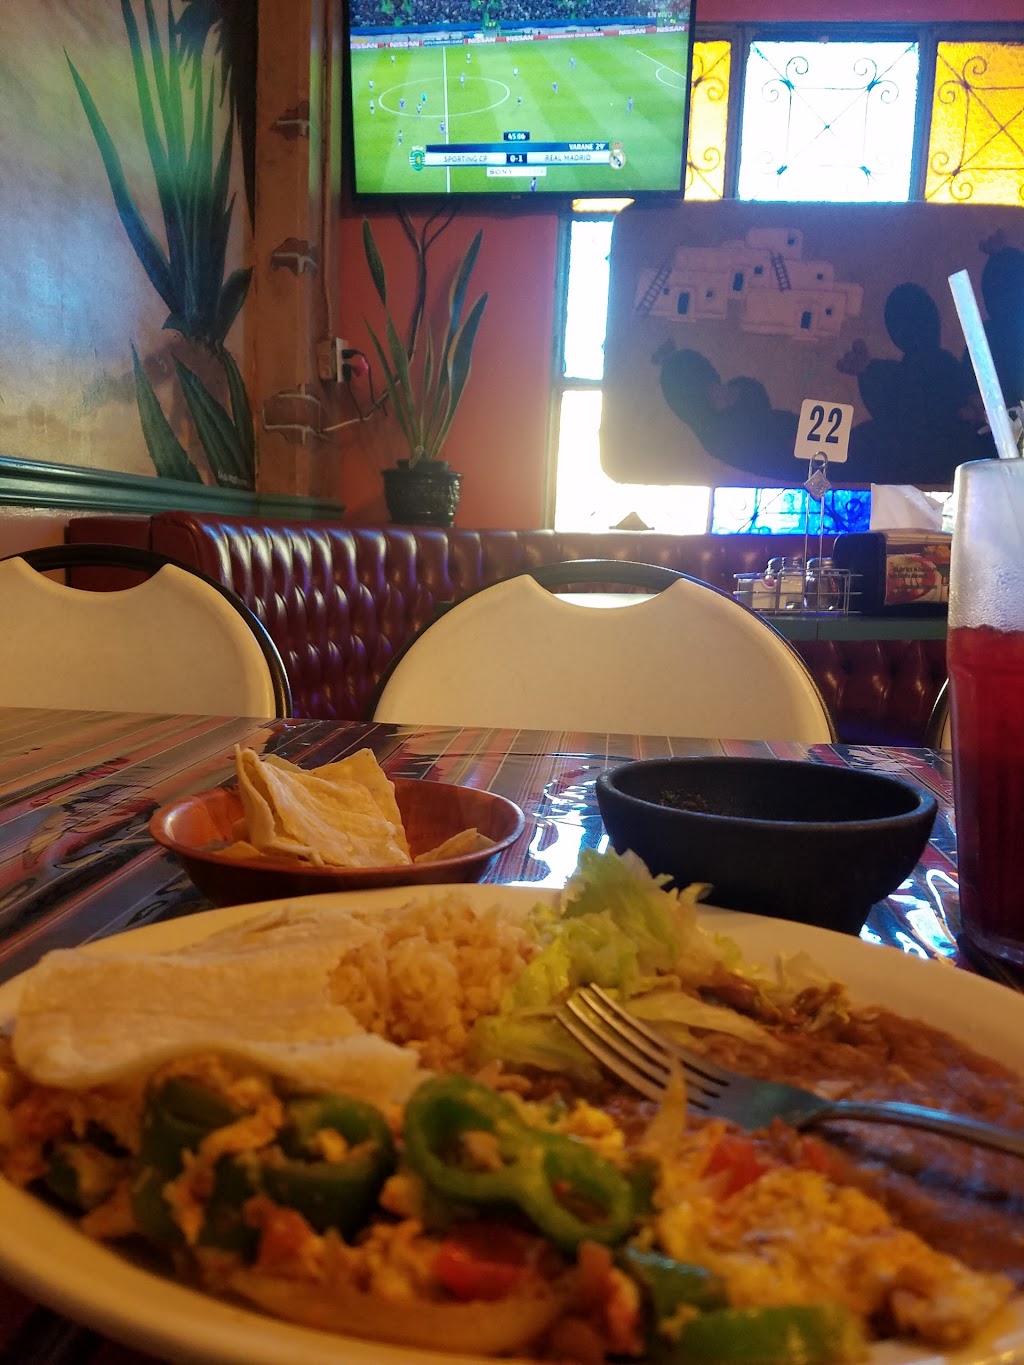 El Tapatio Dos Mexicanos Grill | 1214 E Pomona St, Santa Ana, CA 92707, USA | Phone: (714) 835-4264